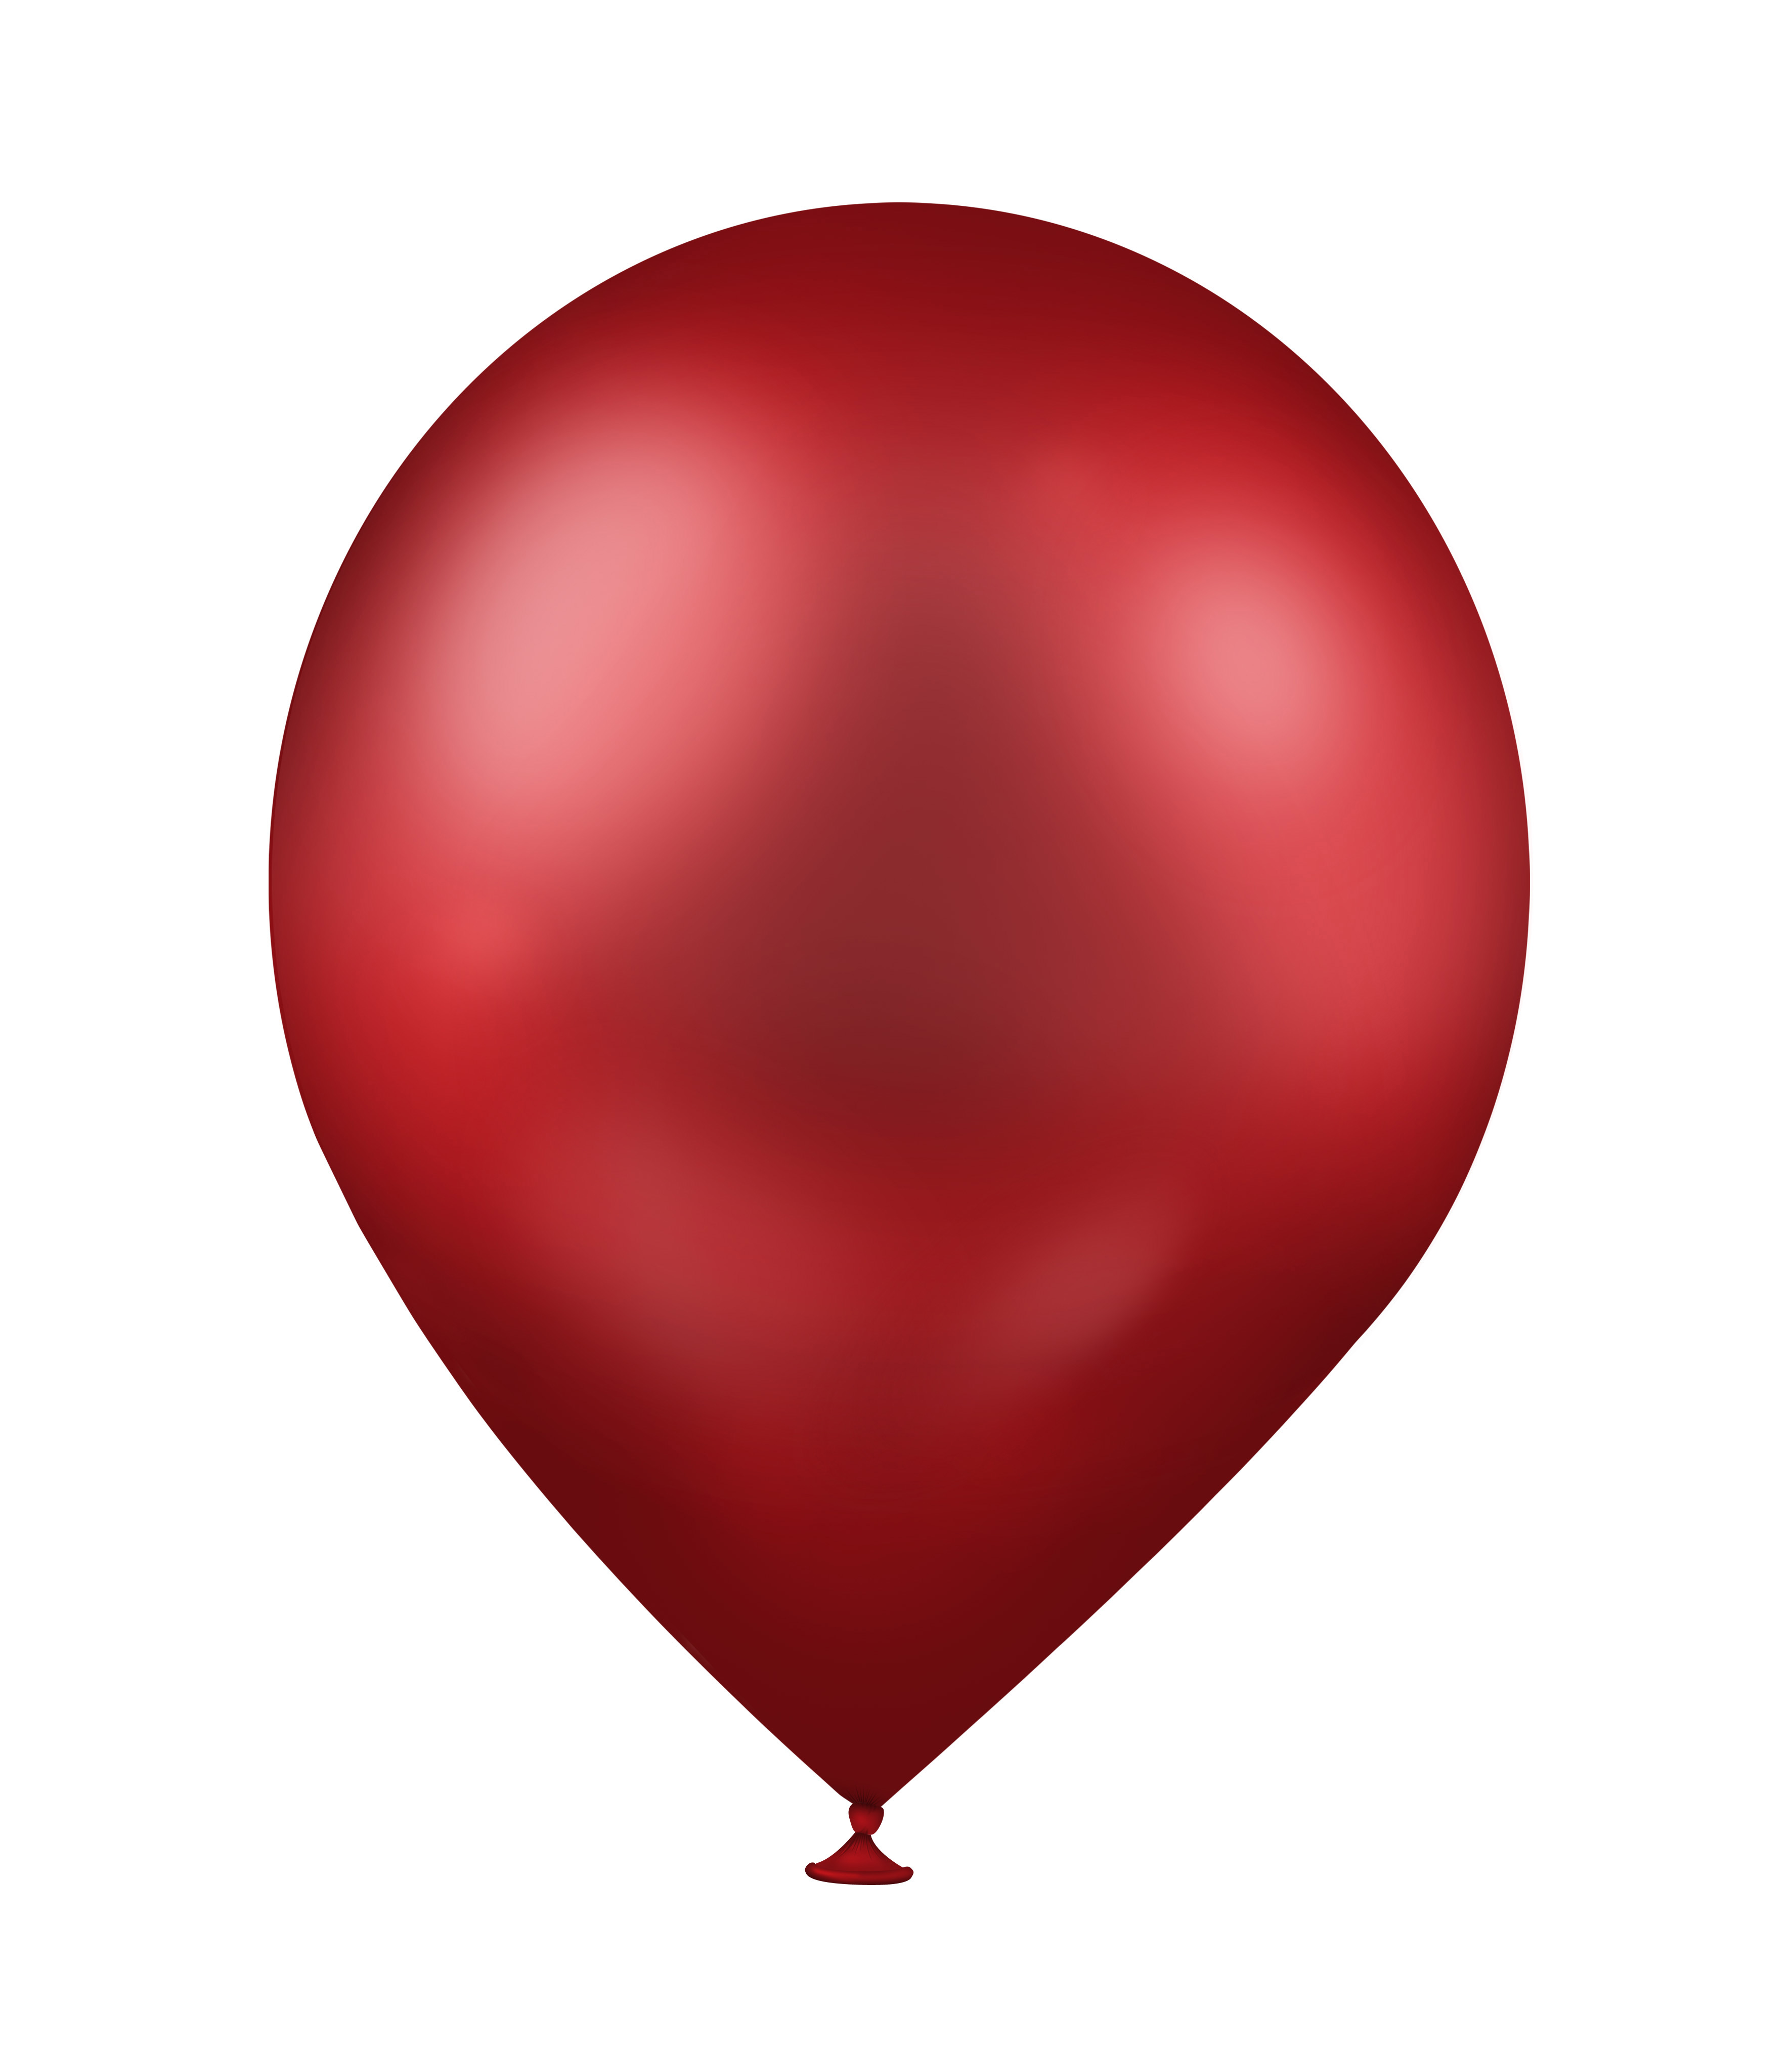 Balloon image - vector clip art online, royalty free  public domain